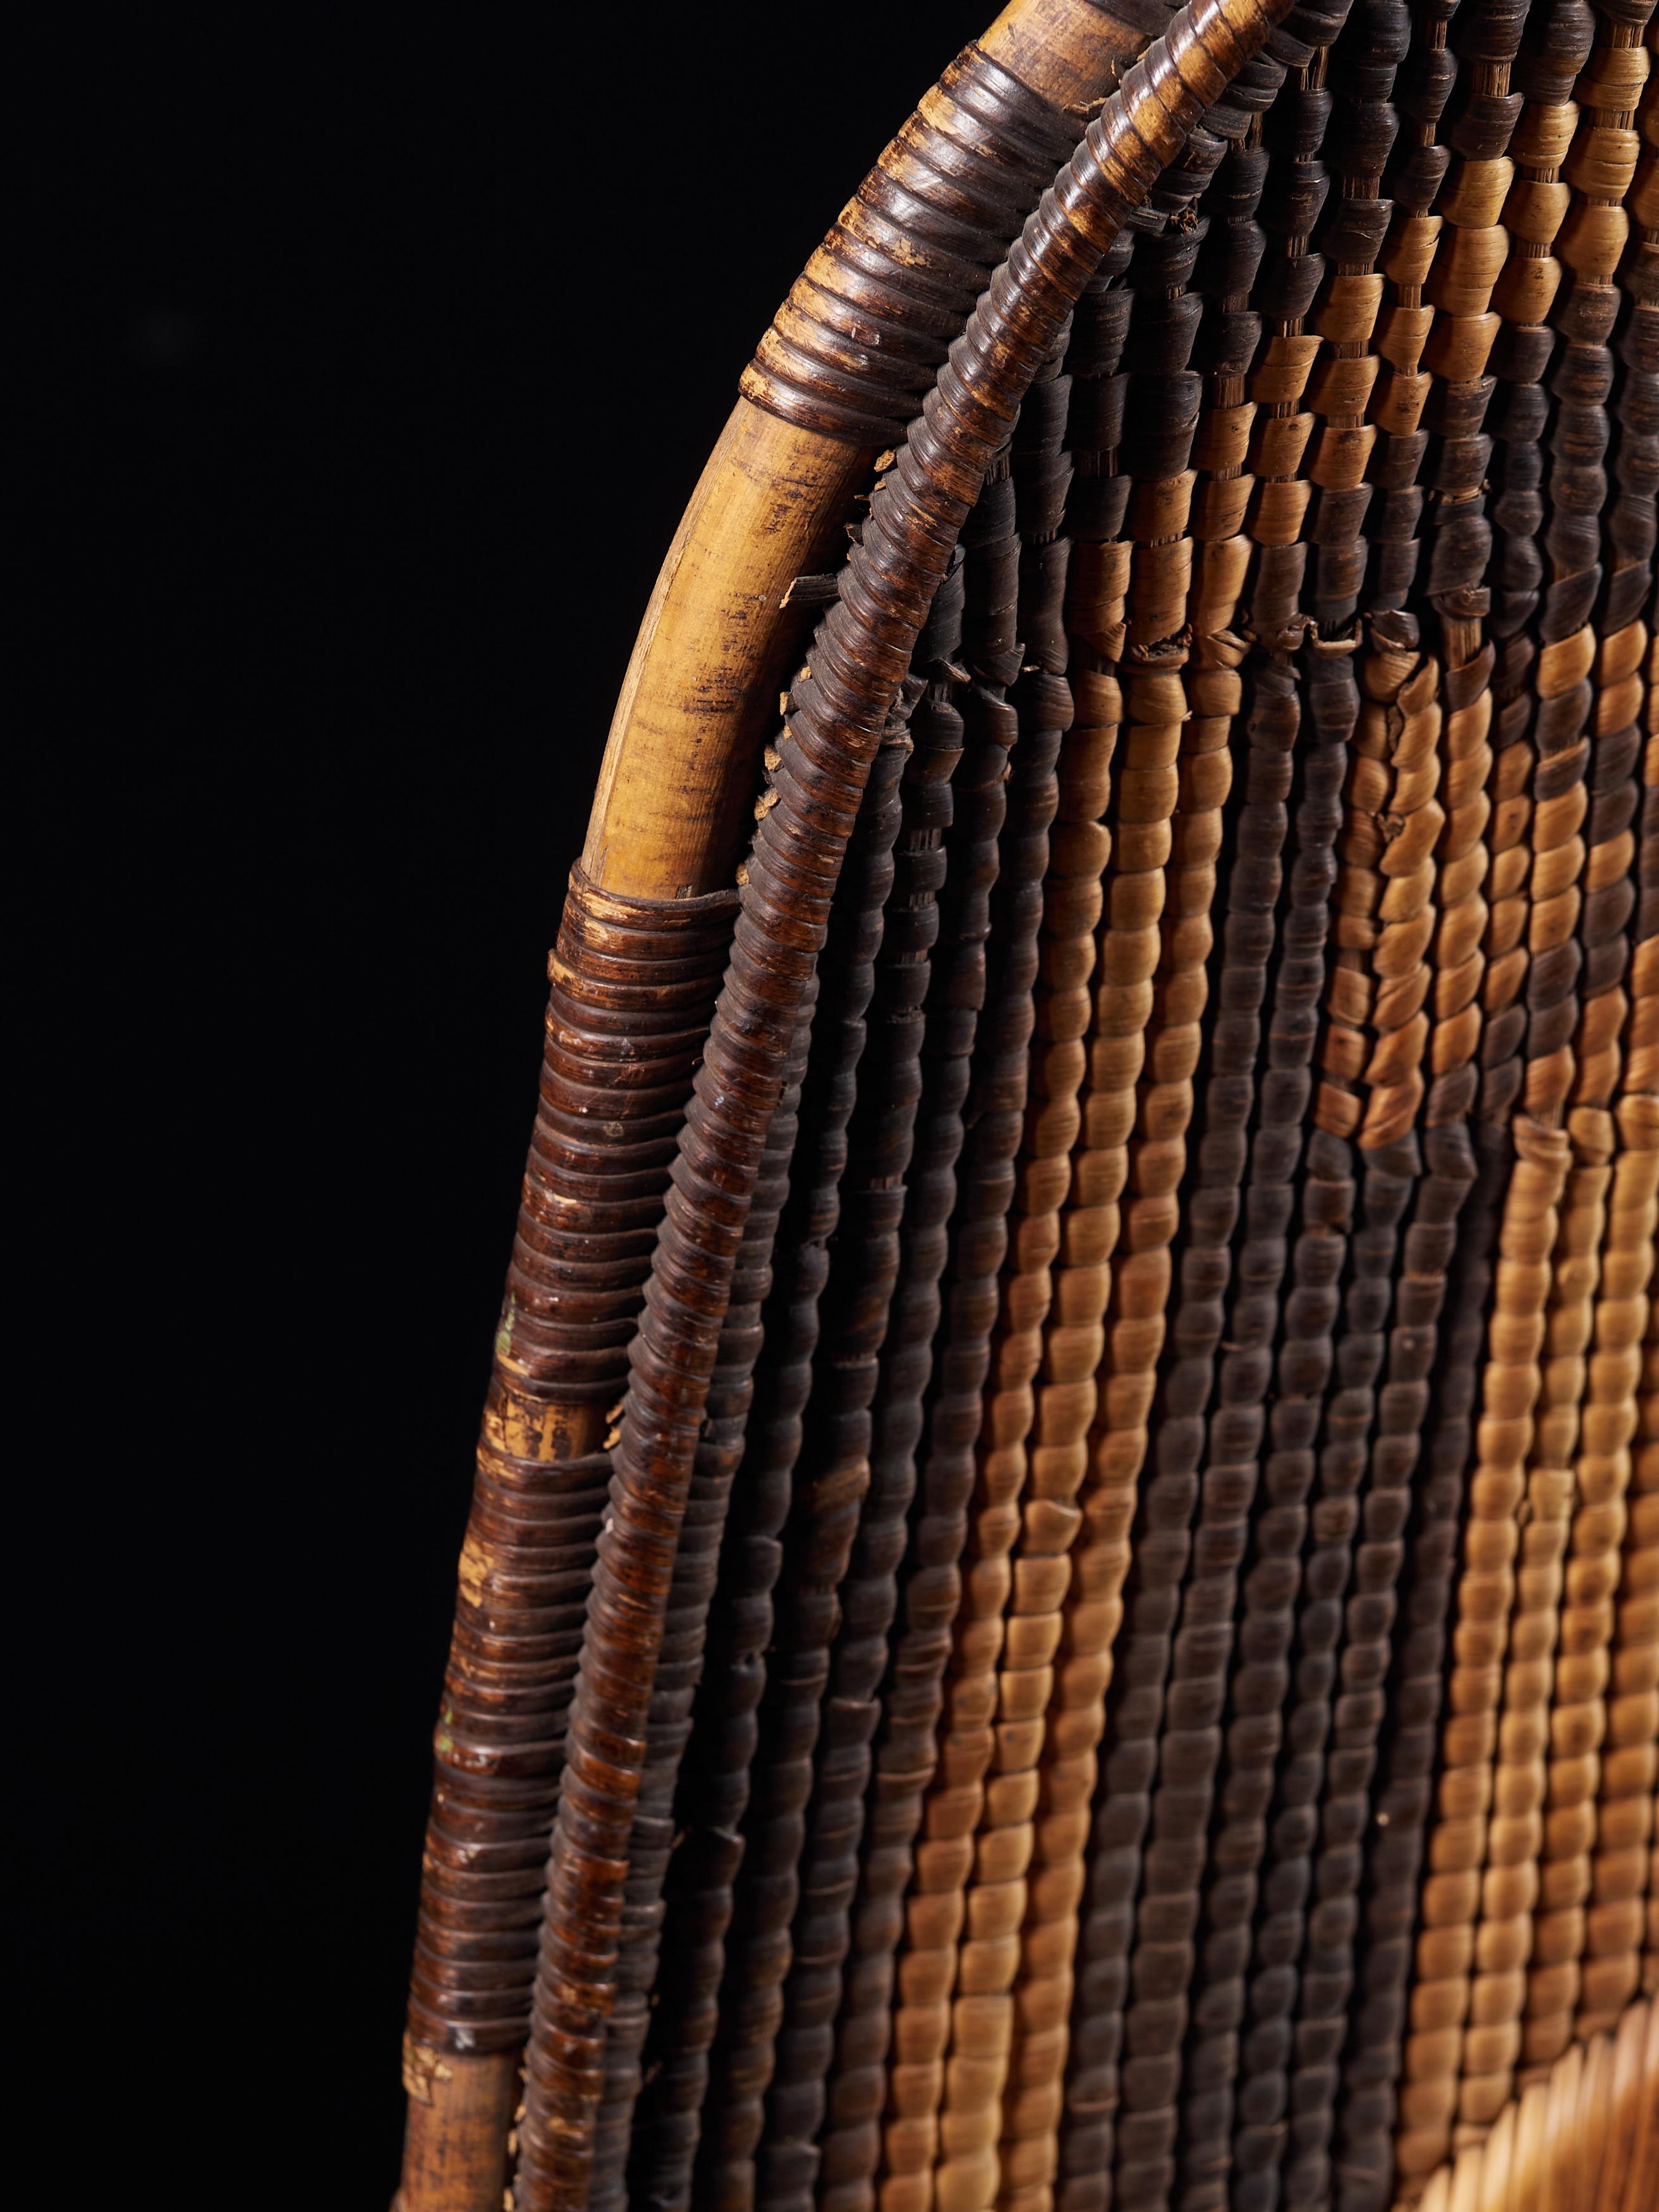 19th Century Decorative War Shield from the Azande People in the Democratic Republic of Congo